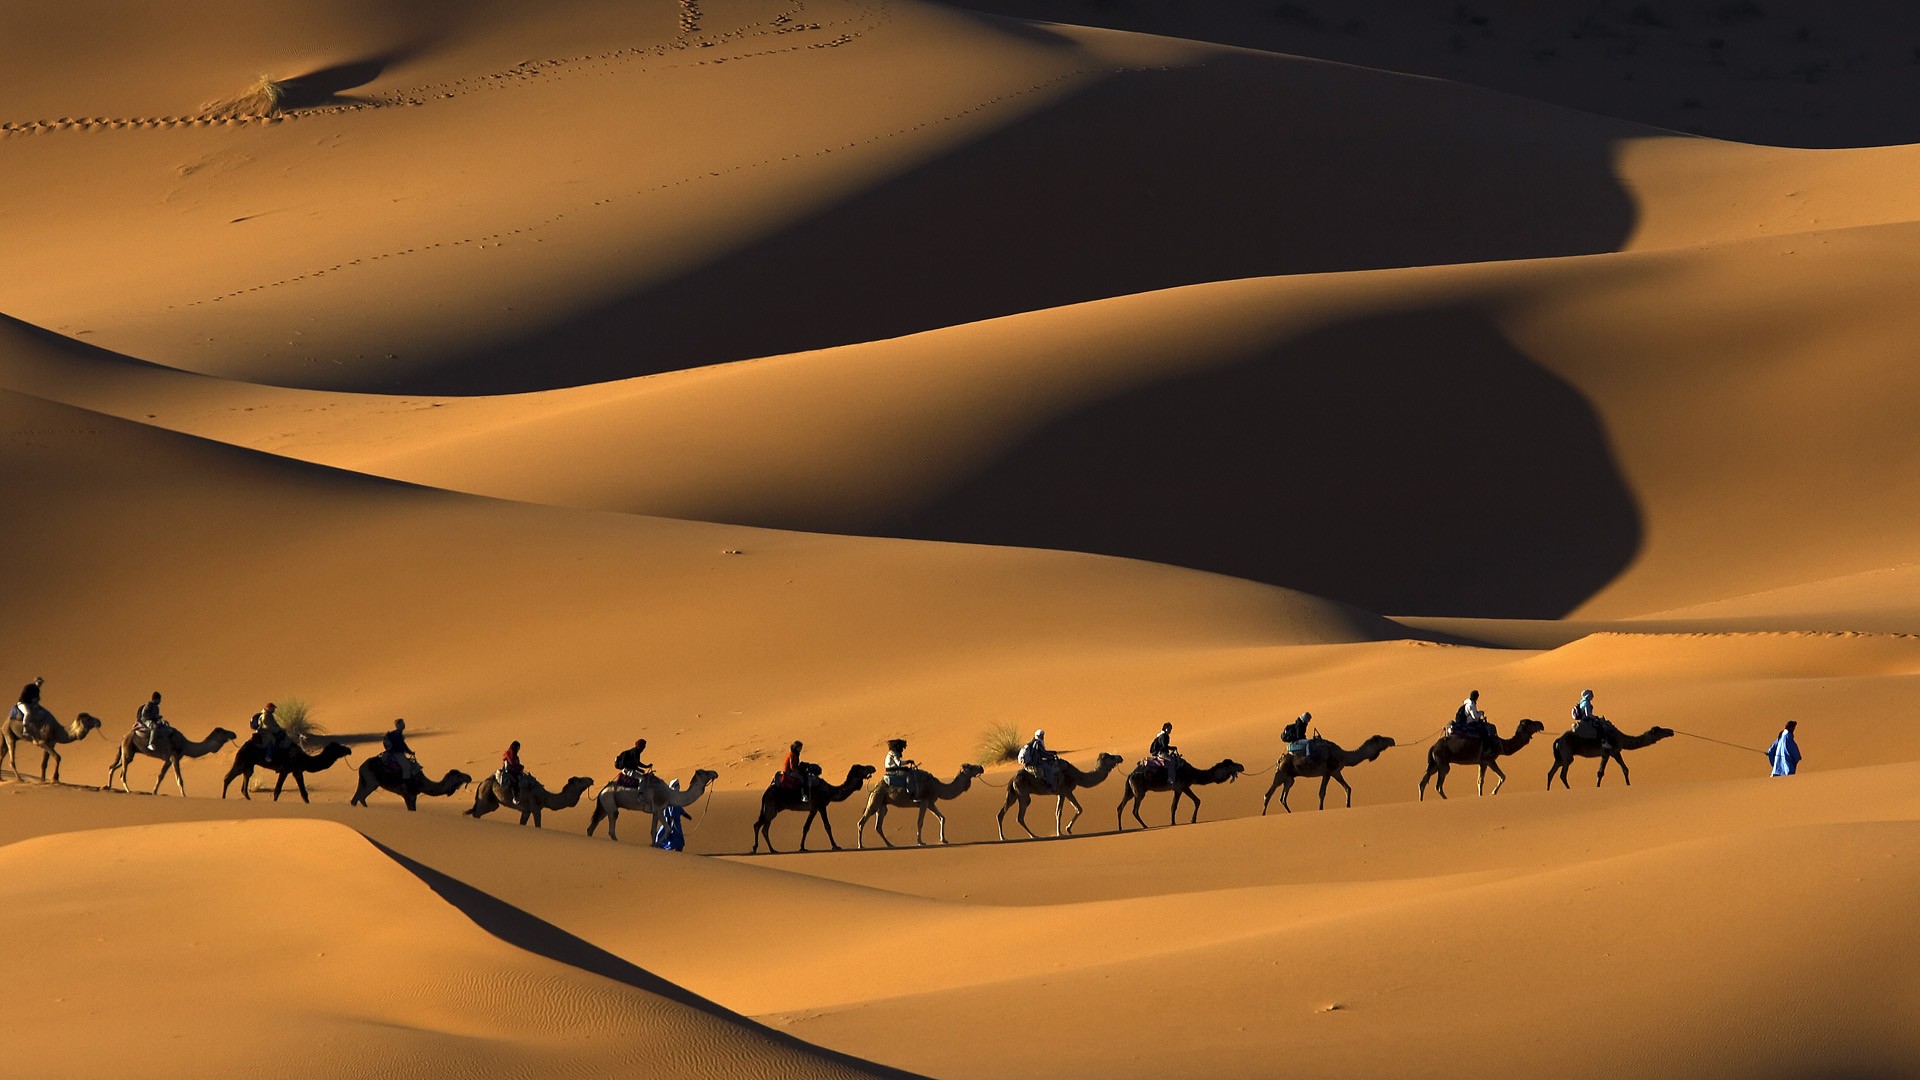 Morocco camel ride tours to explore the Sahara desert of Erg Chebbi in Merzouga